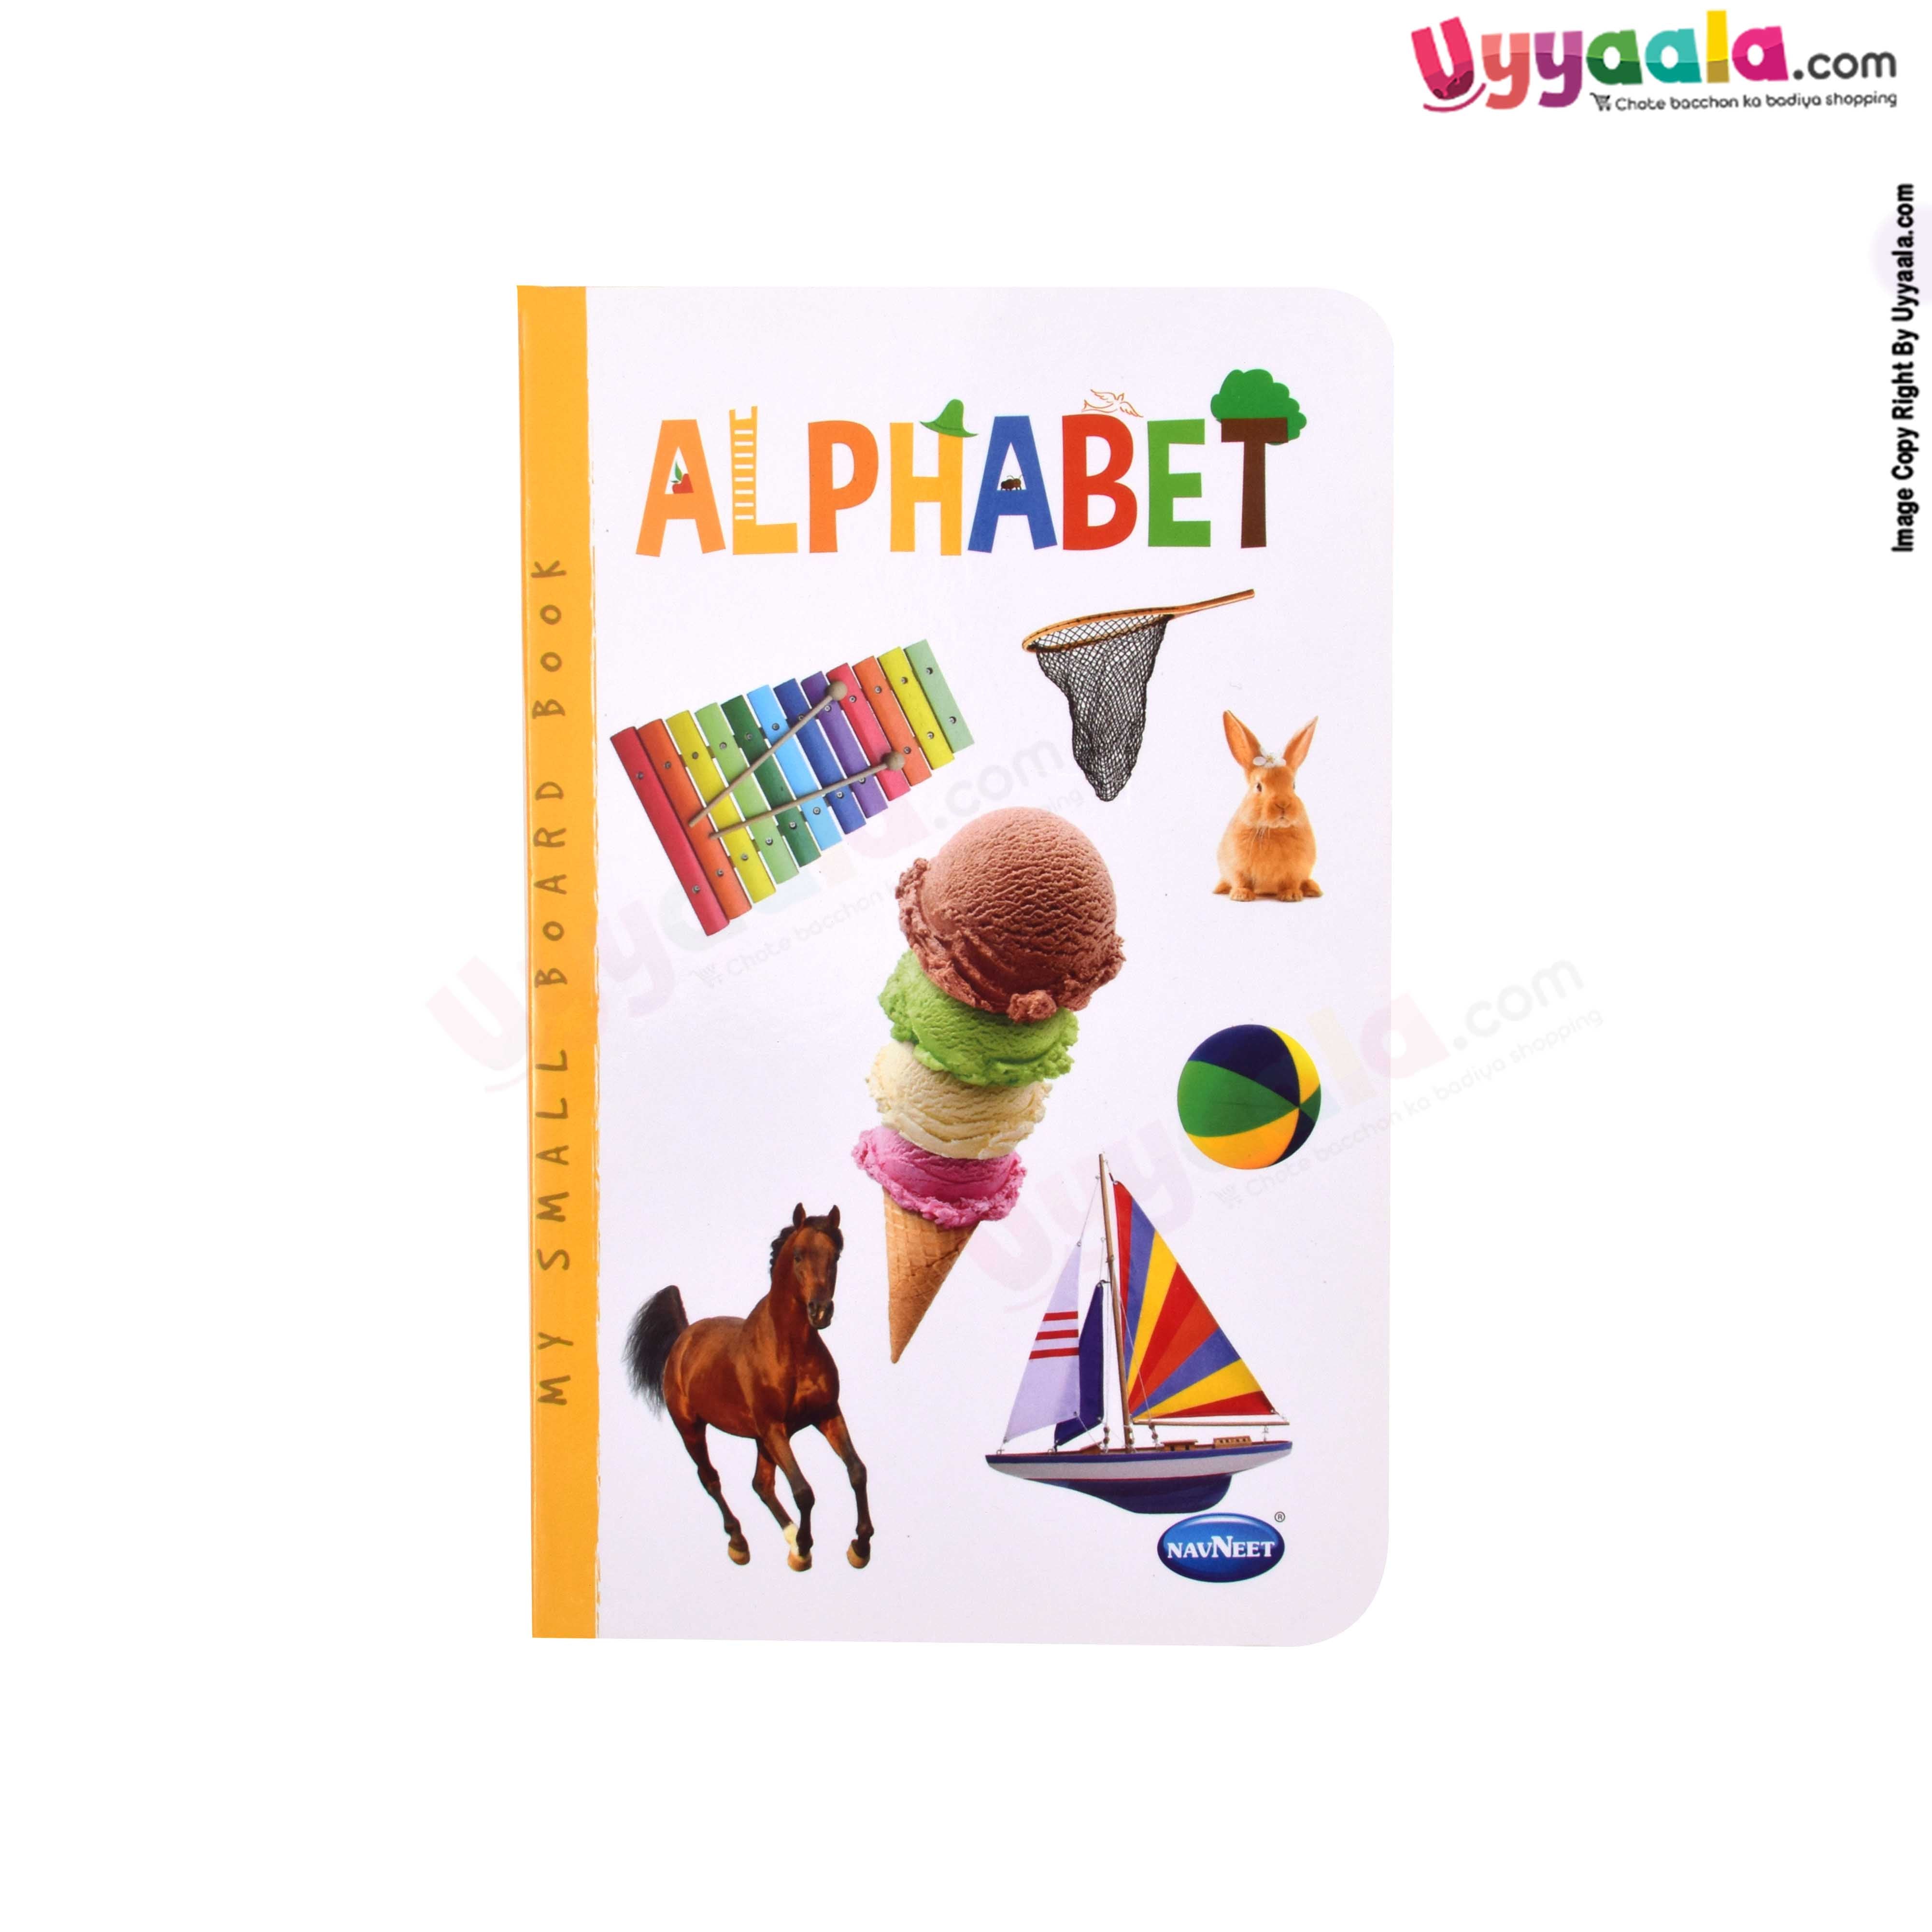 NAVNEEET my small board book - alphabet